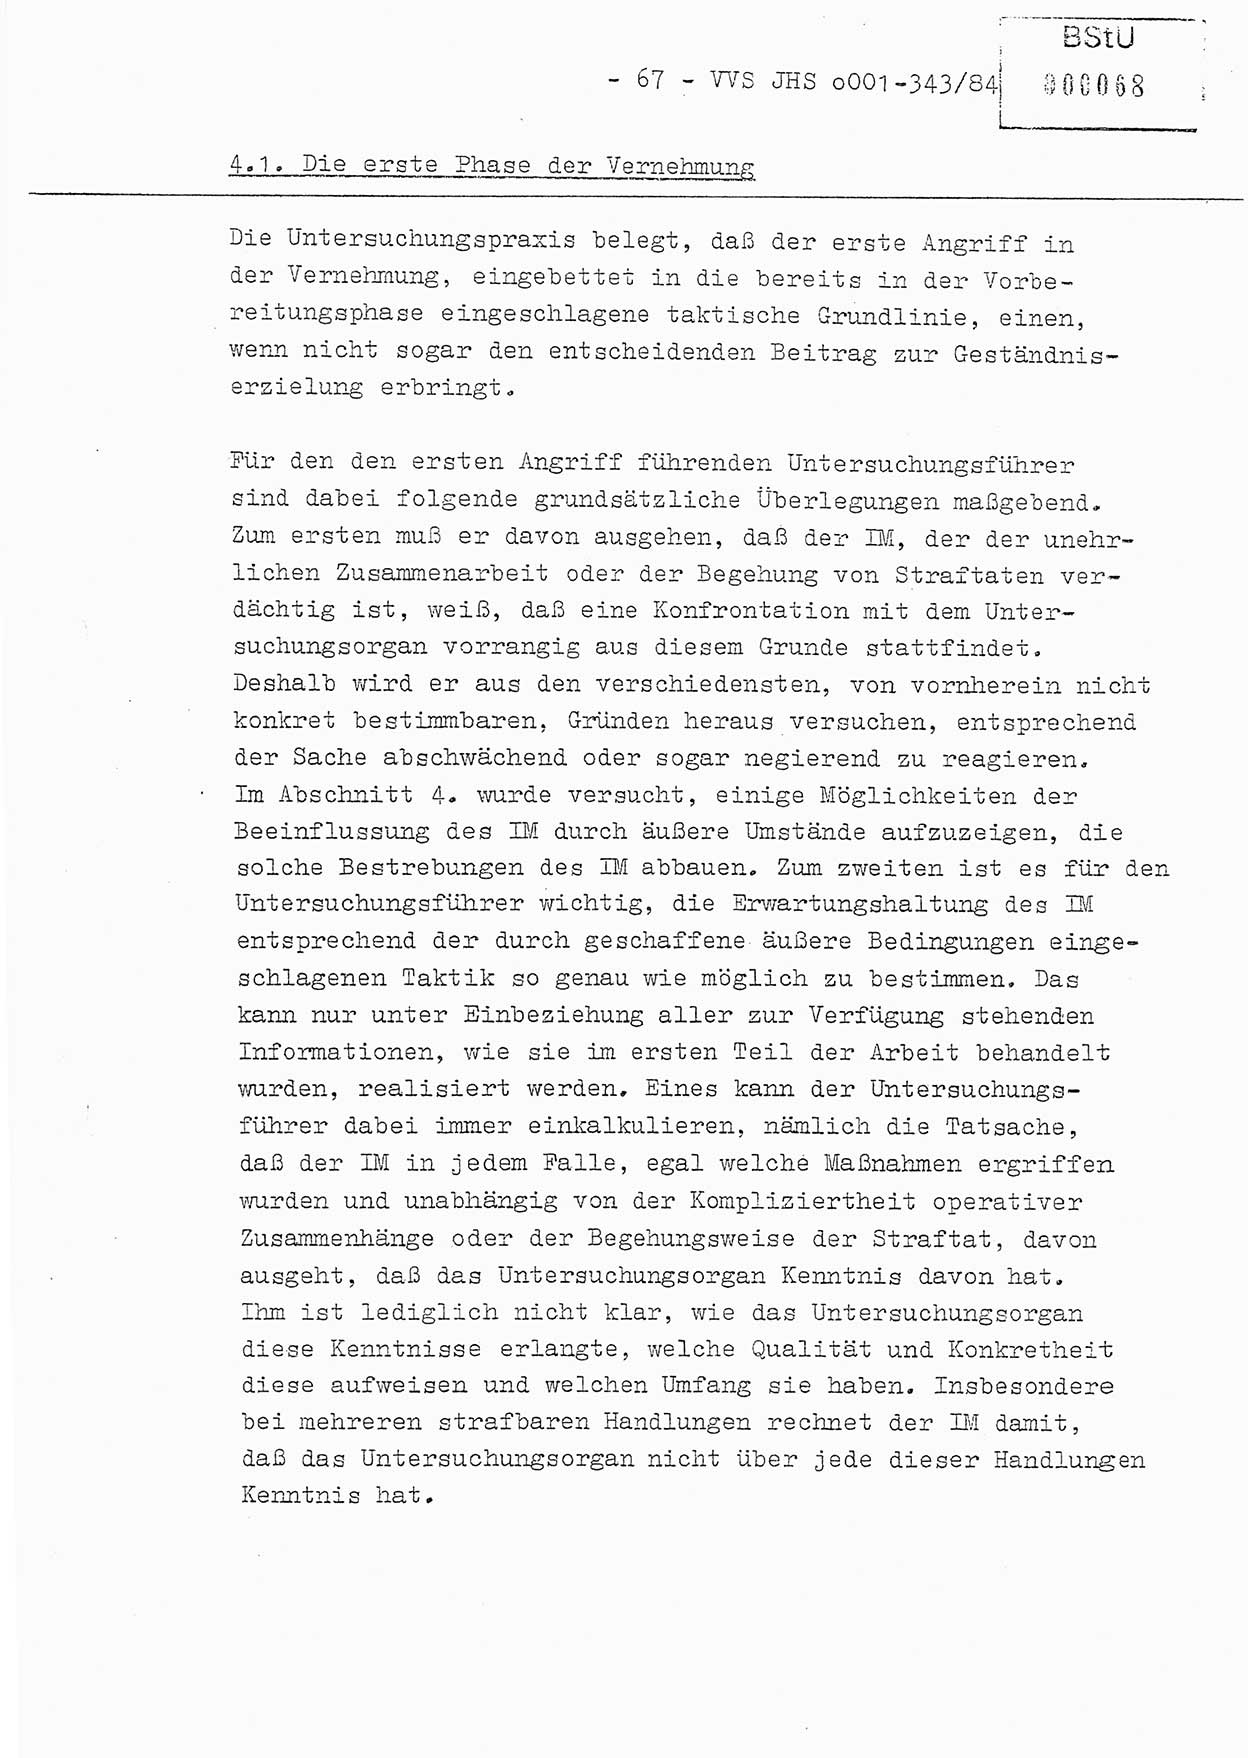 Diplomarbeit, Oberleutnant Bernd Michael (HA Ⅸ/5), Oberleutnant Peter Felber (HA IX/5), Ministerium für Staatssicherheit (MfS) [Deutsche Demokratische Republik (DDR)], Juristische Hochschule (JHS), Vertrauliche Verschlußsache (VVS) o001-343/84, Potsdam 1985, Seite 67 (Dipl.-Arb. MfS DDR JHS VVS o001-343/84 1985, S. 67)